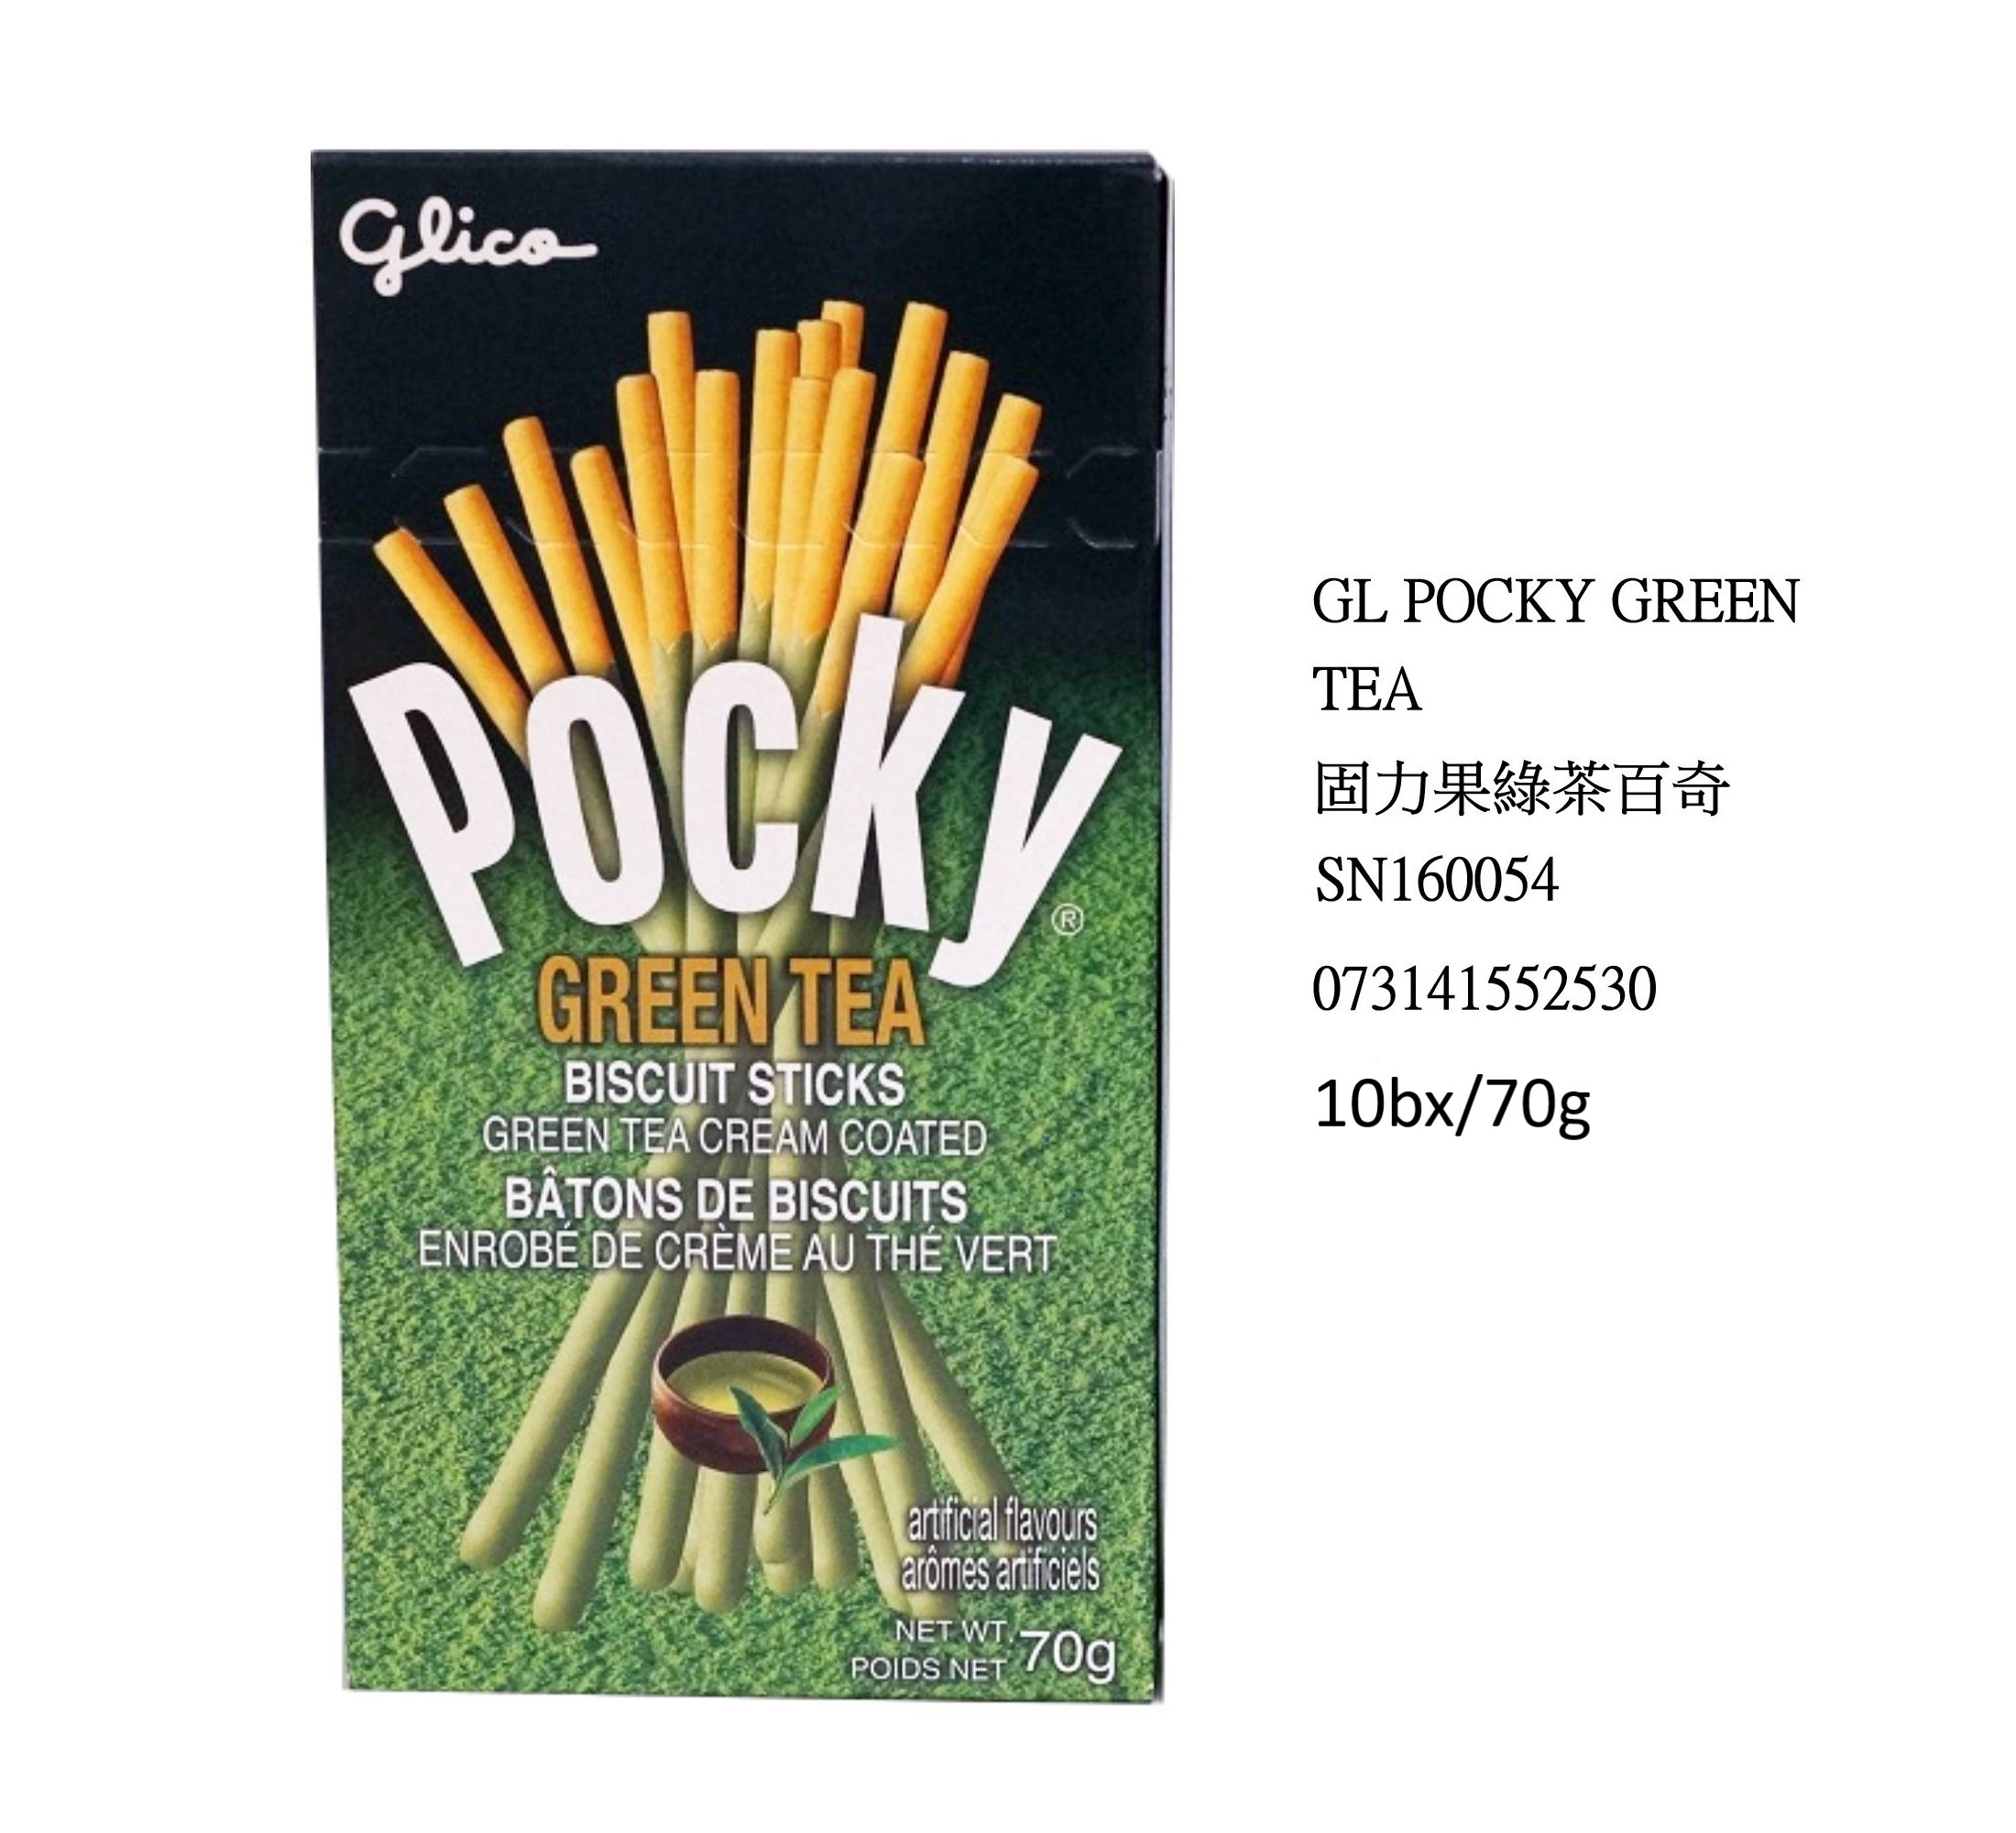 GLICO POCKY GREEN TEA BISCUIT STICKS (LG) SN160054